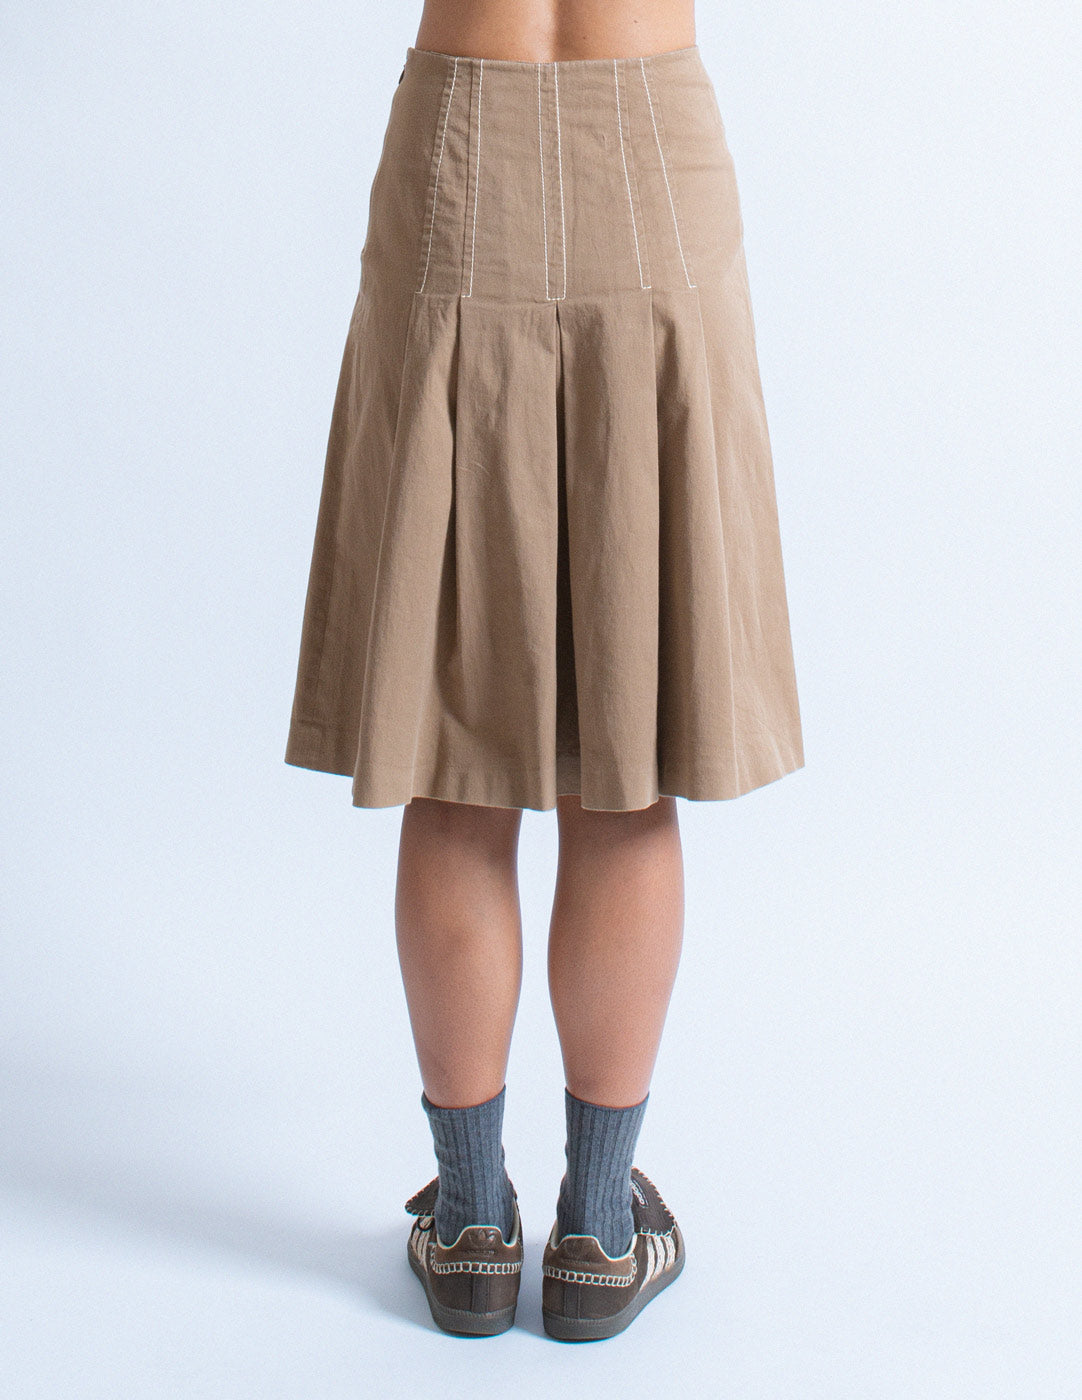 Prada khaki pleated cotton skirt back detail